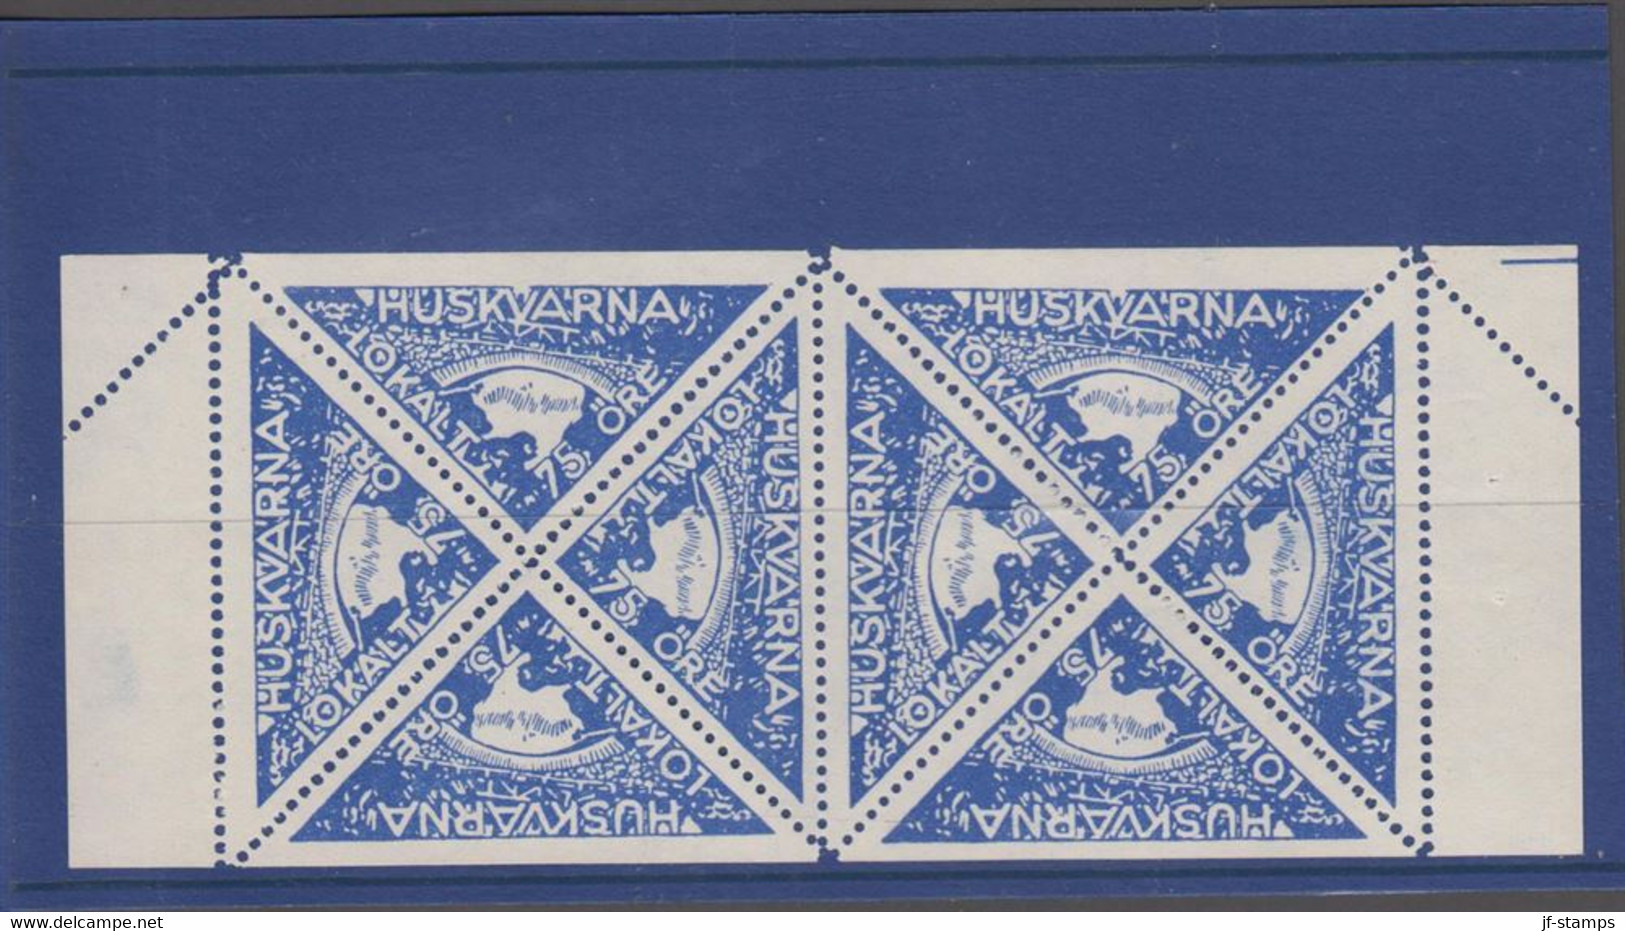 1945. SVERIGE. HUSKVARNA LOKALT 75 ÖRE In Booklet Pane With 8 Stamps Never Hinged Stamps. Unusual.  - JF520099 - Local Post Stamps